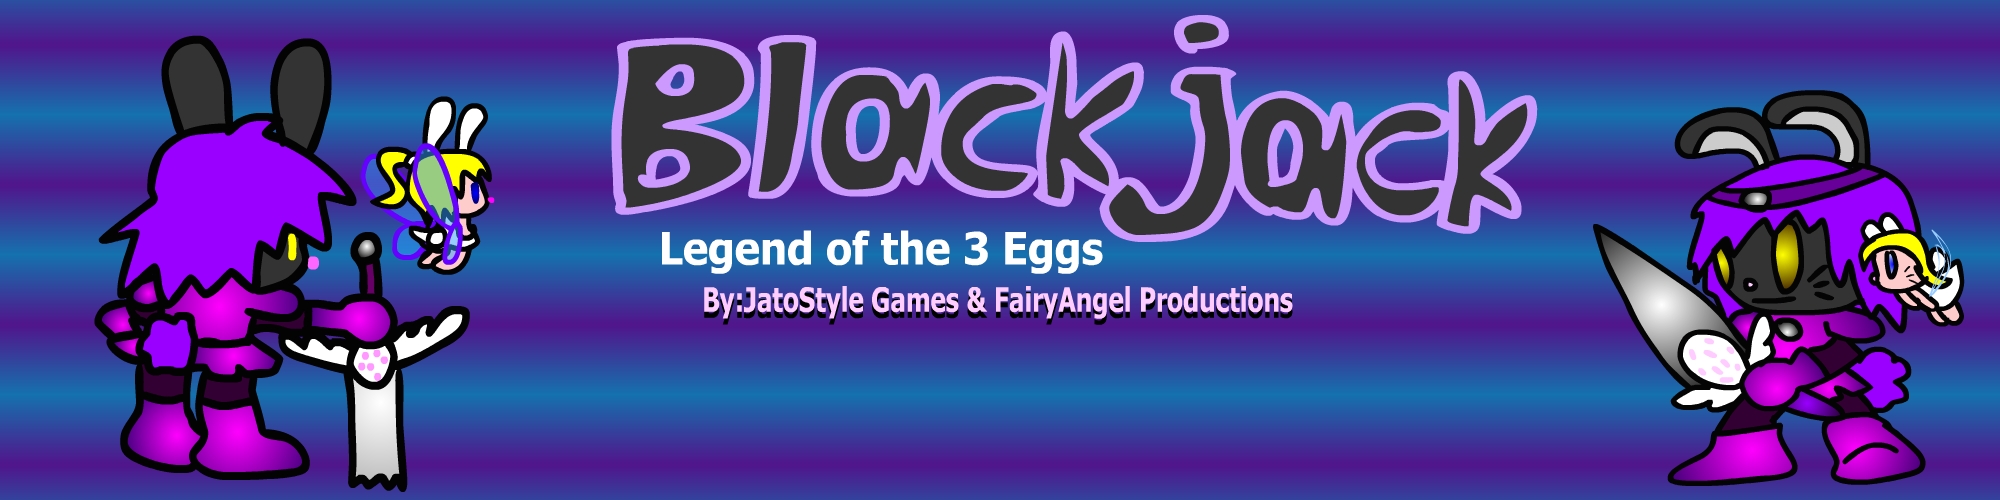 Blackjack Legend of the 3 eggs